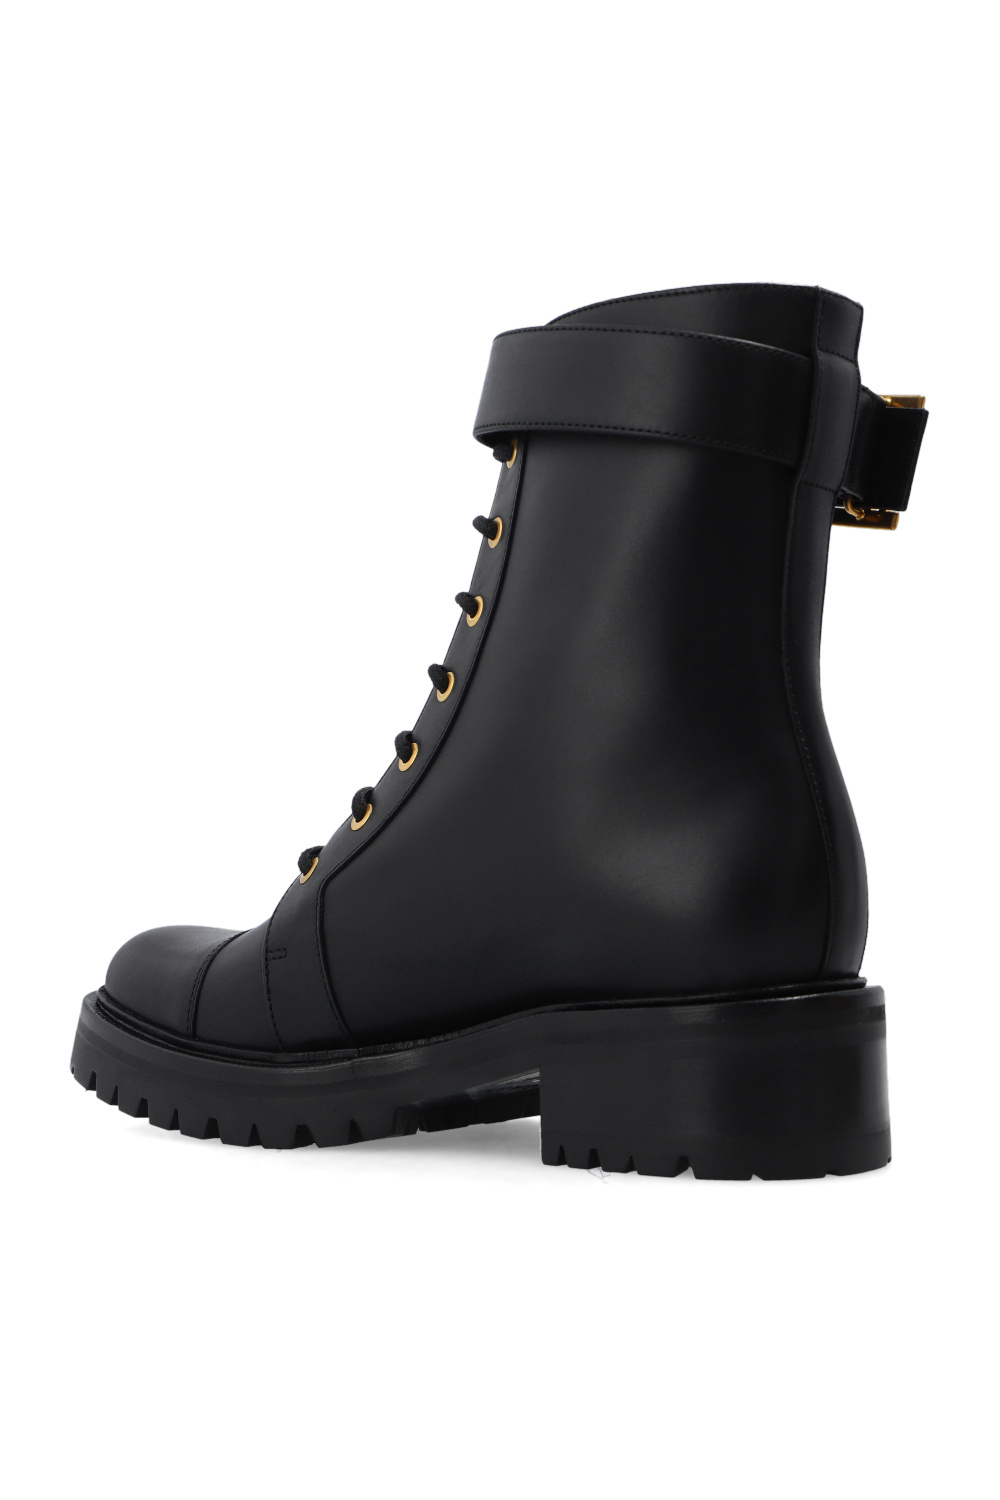 Balmain ‘Ranger’ ankle boots